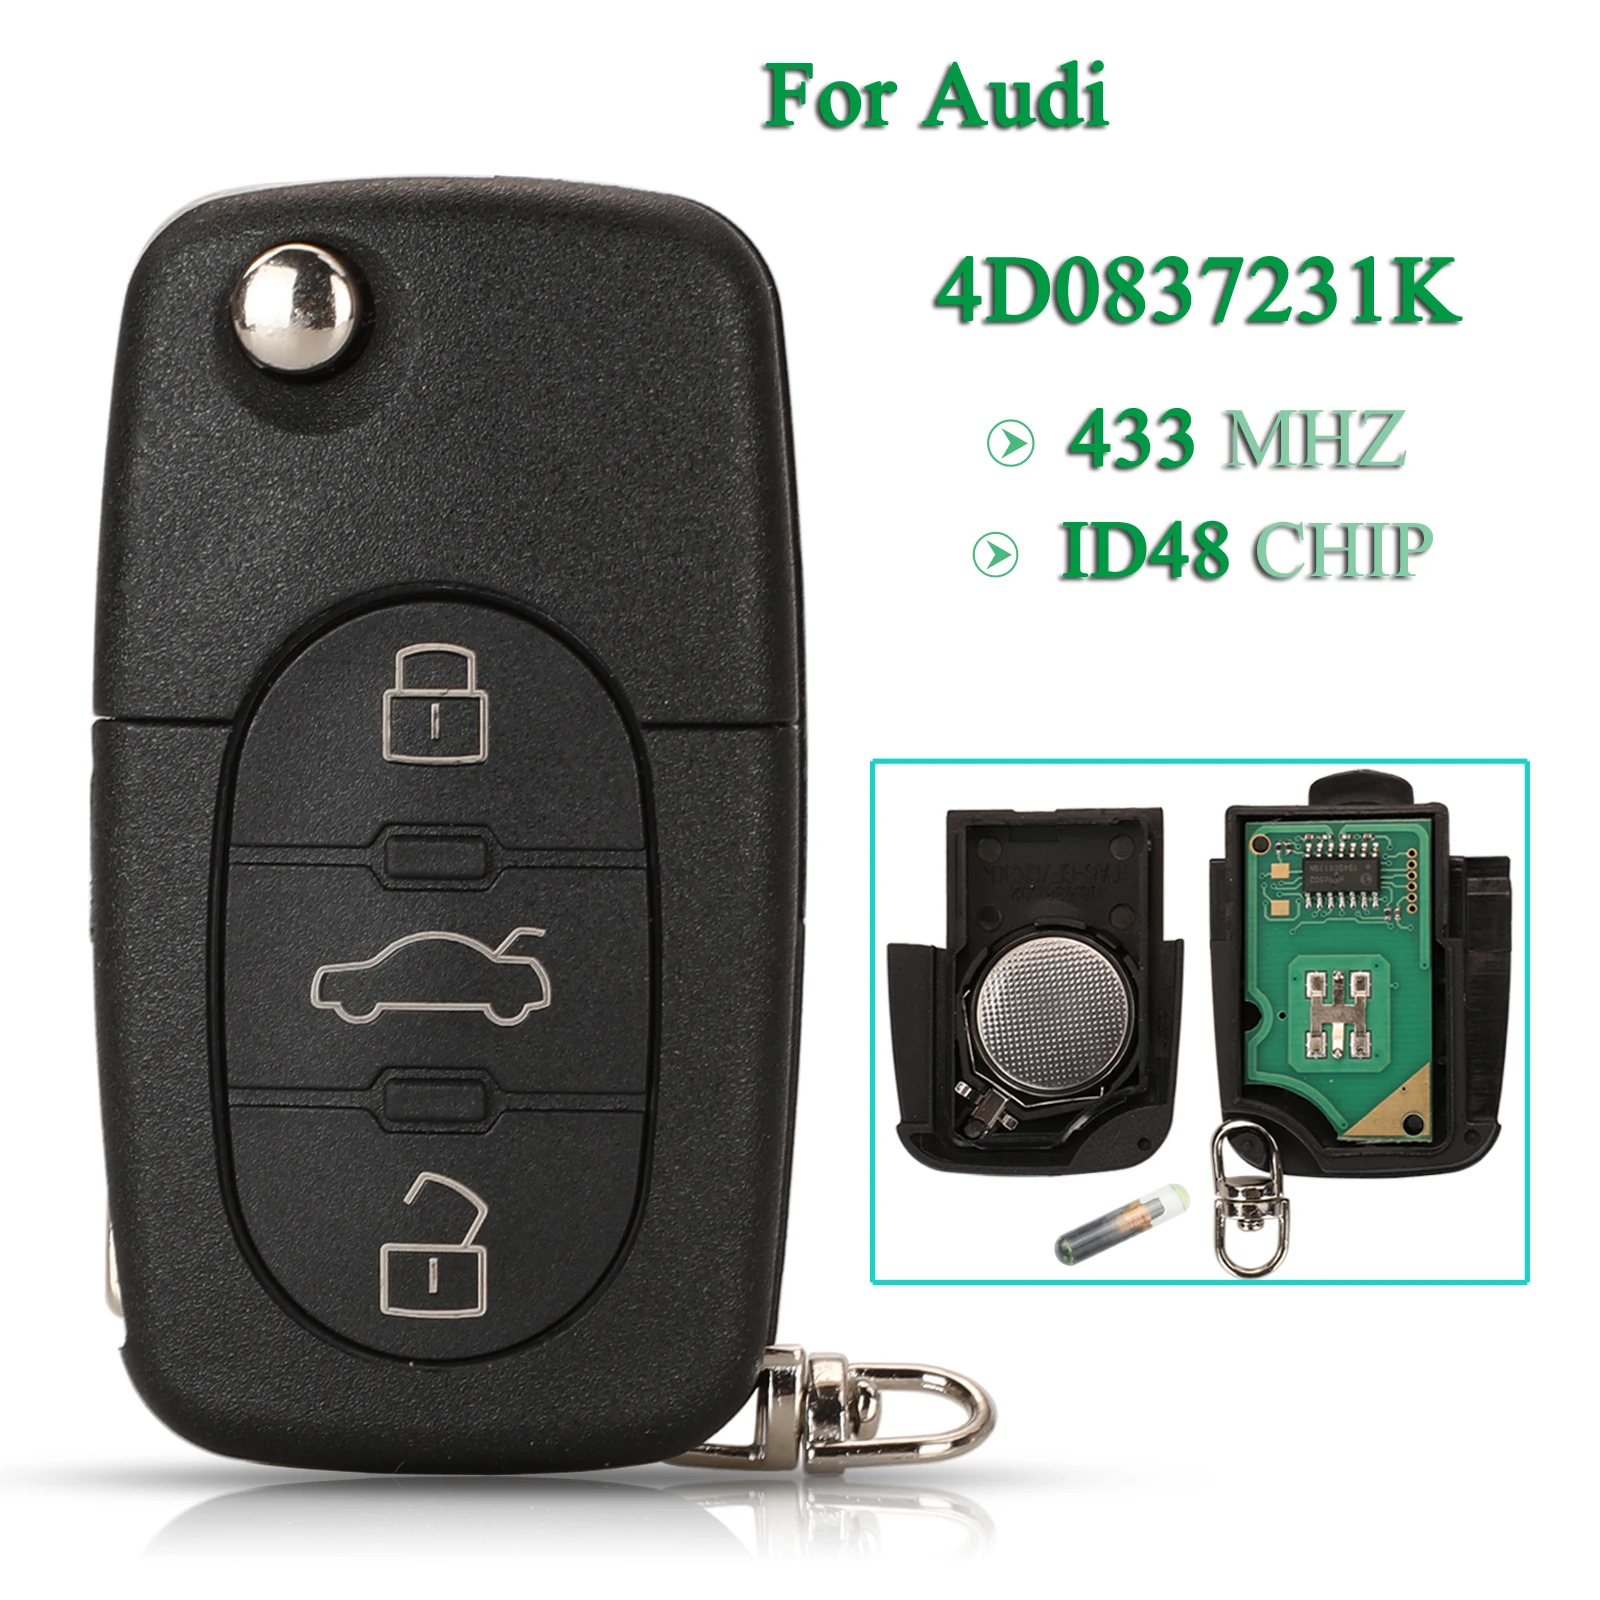 

jingyuqin 3 Buttons Smart Remote Car Key 433Mhz ID48 Chip Fob For Audi A2 A3 A4 A6 A8 TT Old Models FCC: 4D0 837 231 K